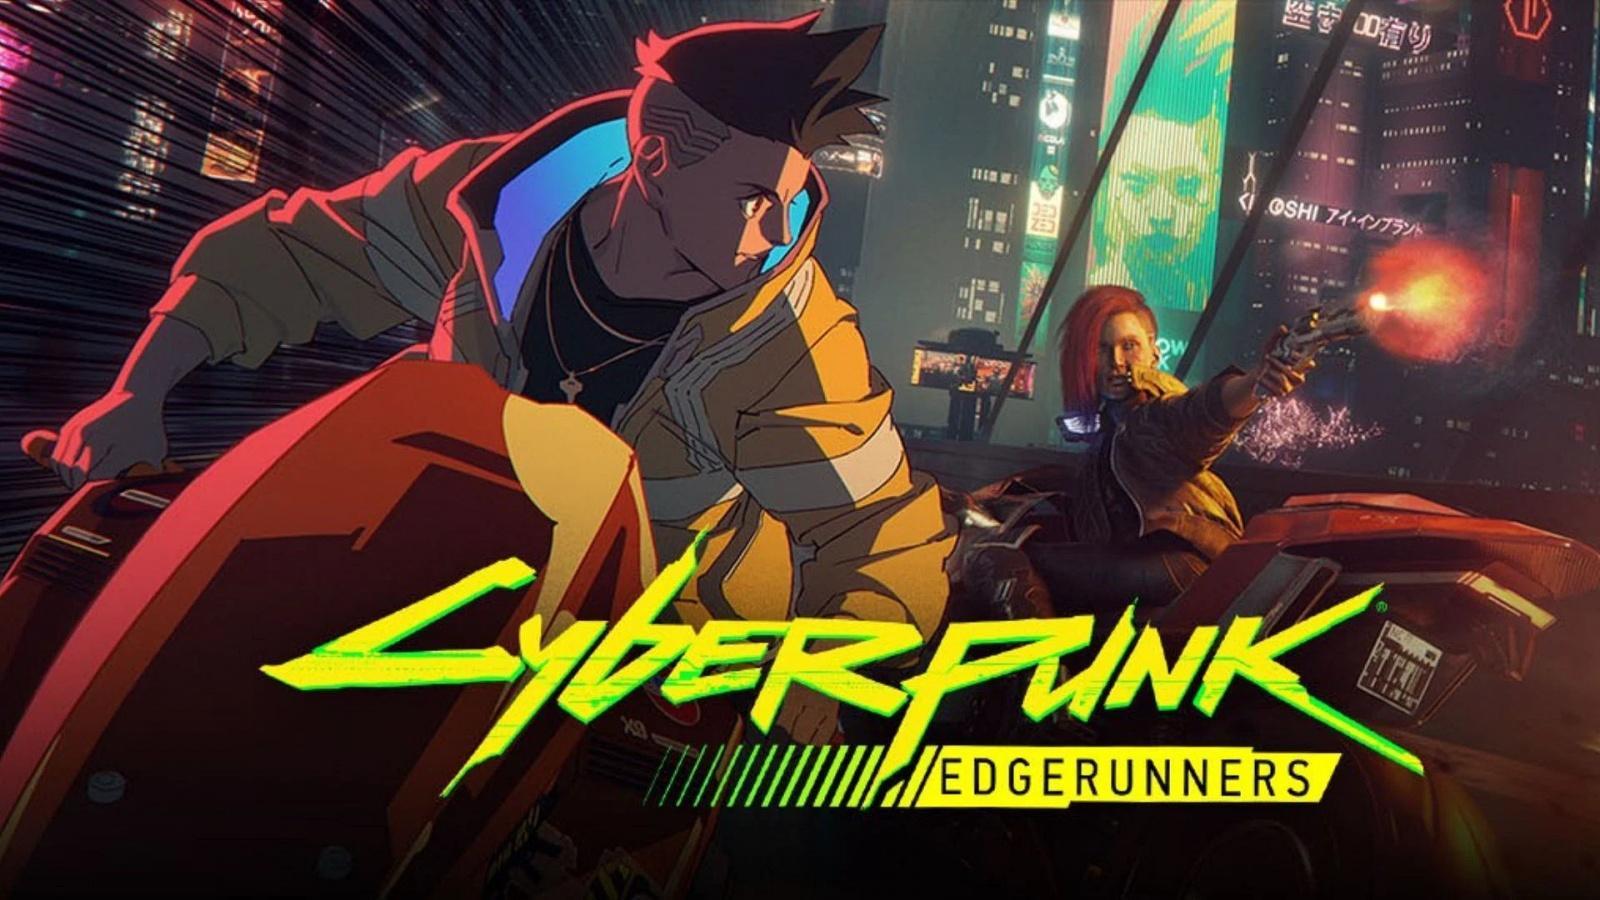 Cyberpunk Edgerunners Season 2 fate revealed after launch hype - Dexerto